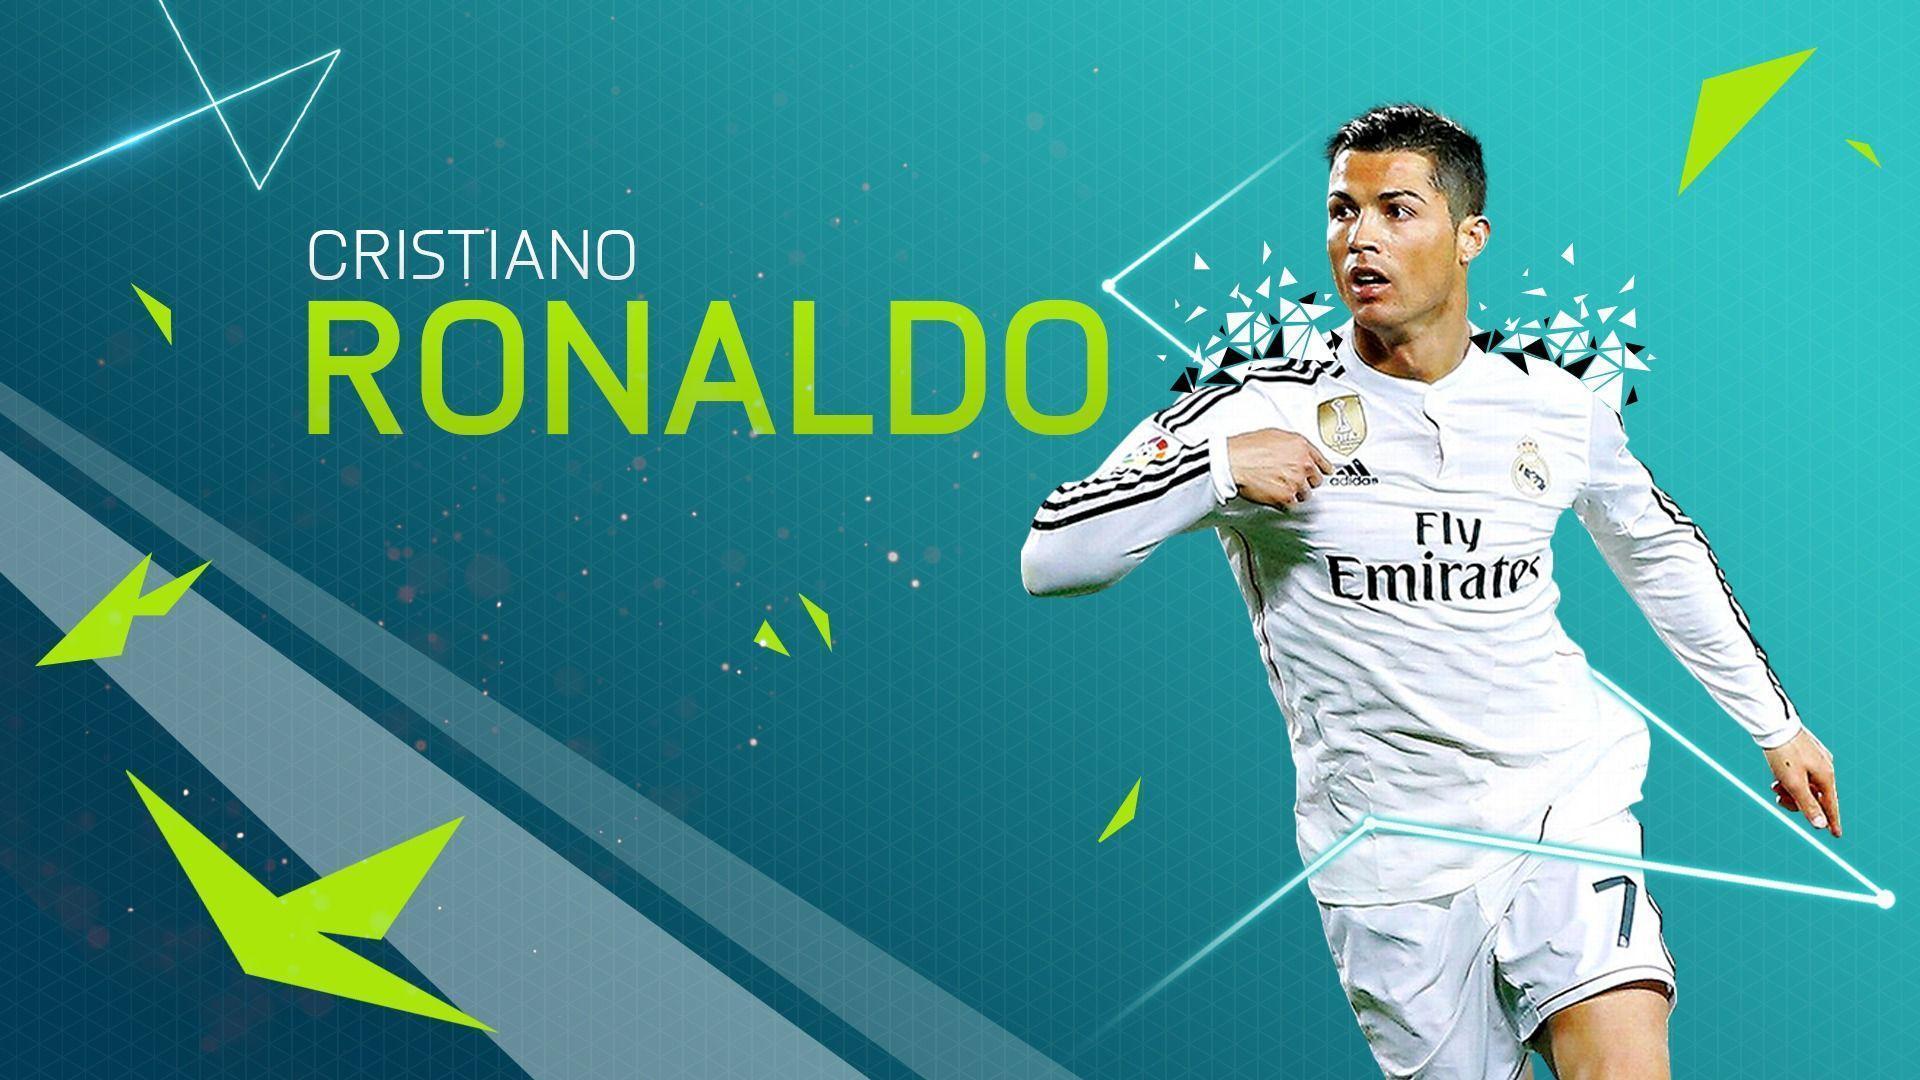 FIFA 16 Cristiano Ronaldo Wallpaper by GoFast97 on YouTube. Cool